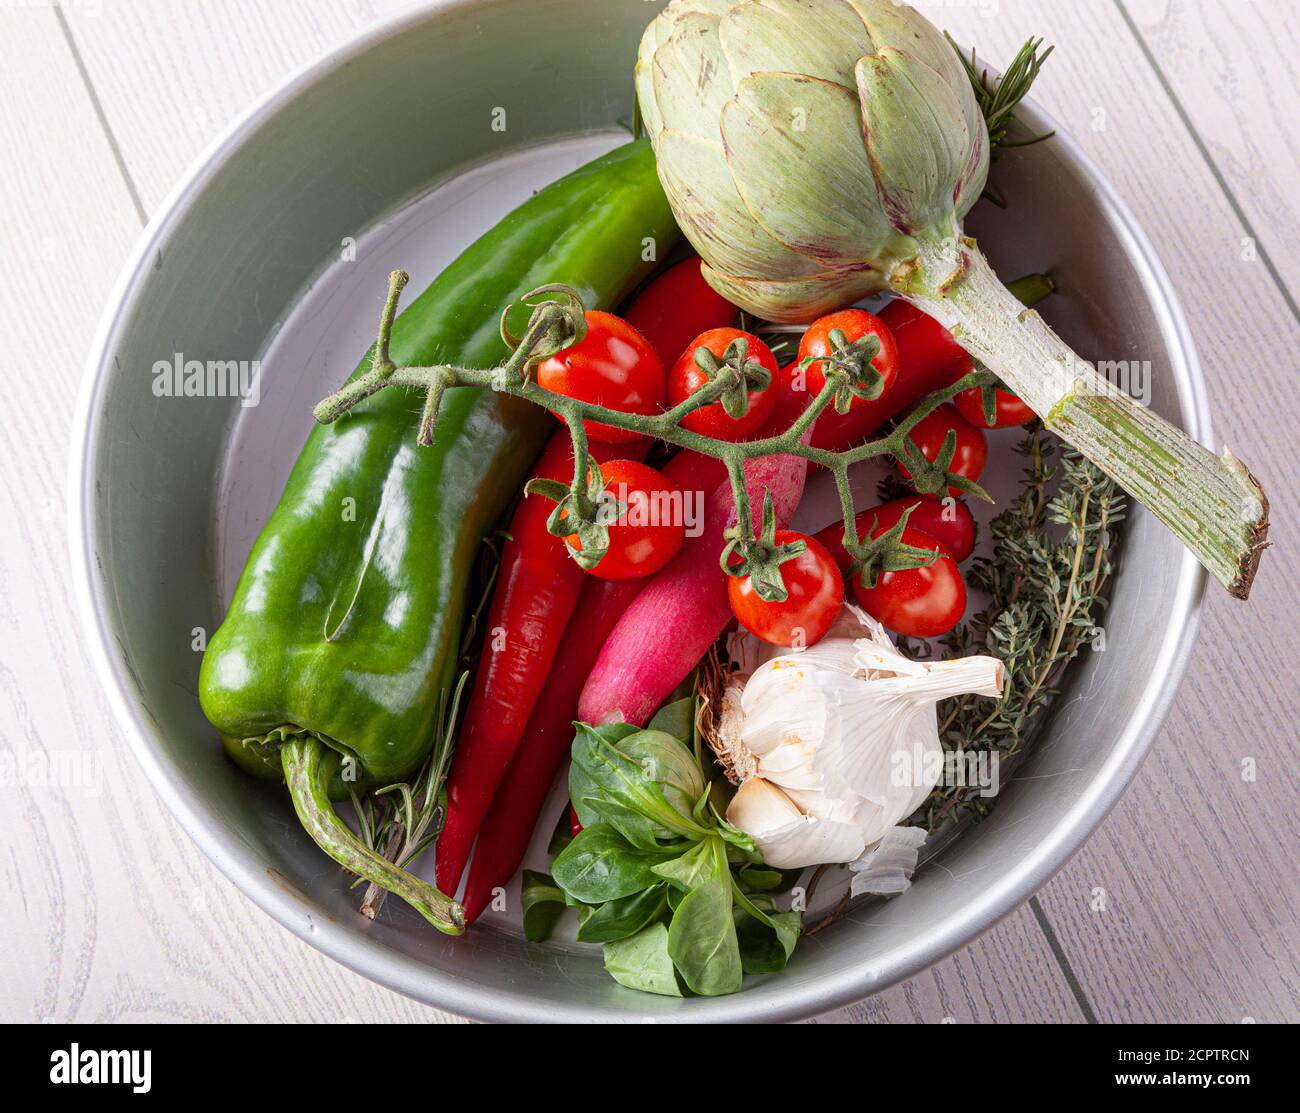 Fresh Italian vegetables and herbs: rosemary, oregano, artichoke, tomato, bell pepper, garlic, lamb lettuce and radish. Stock Photo